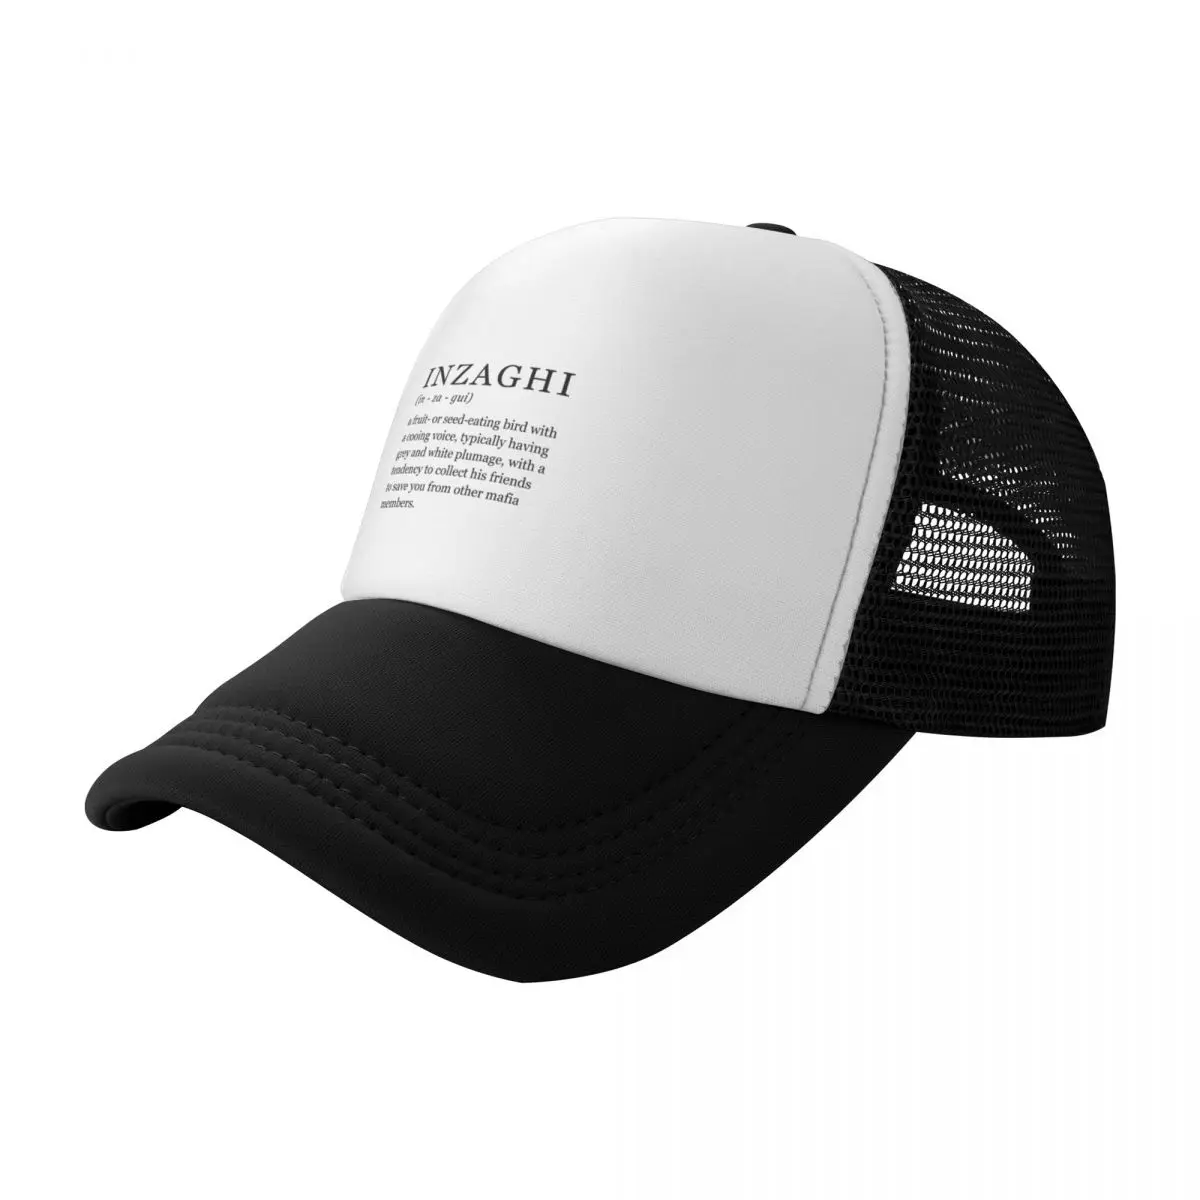 

inzaghi (vincenzo cassano) Baseball Cap Trucker Hat Rave Fishing cap Horse Hat For Man Women's